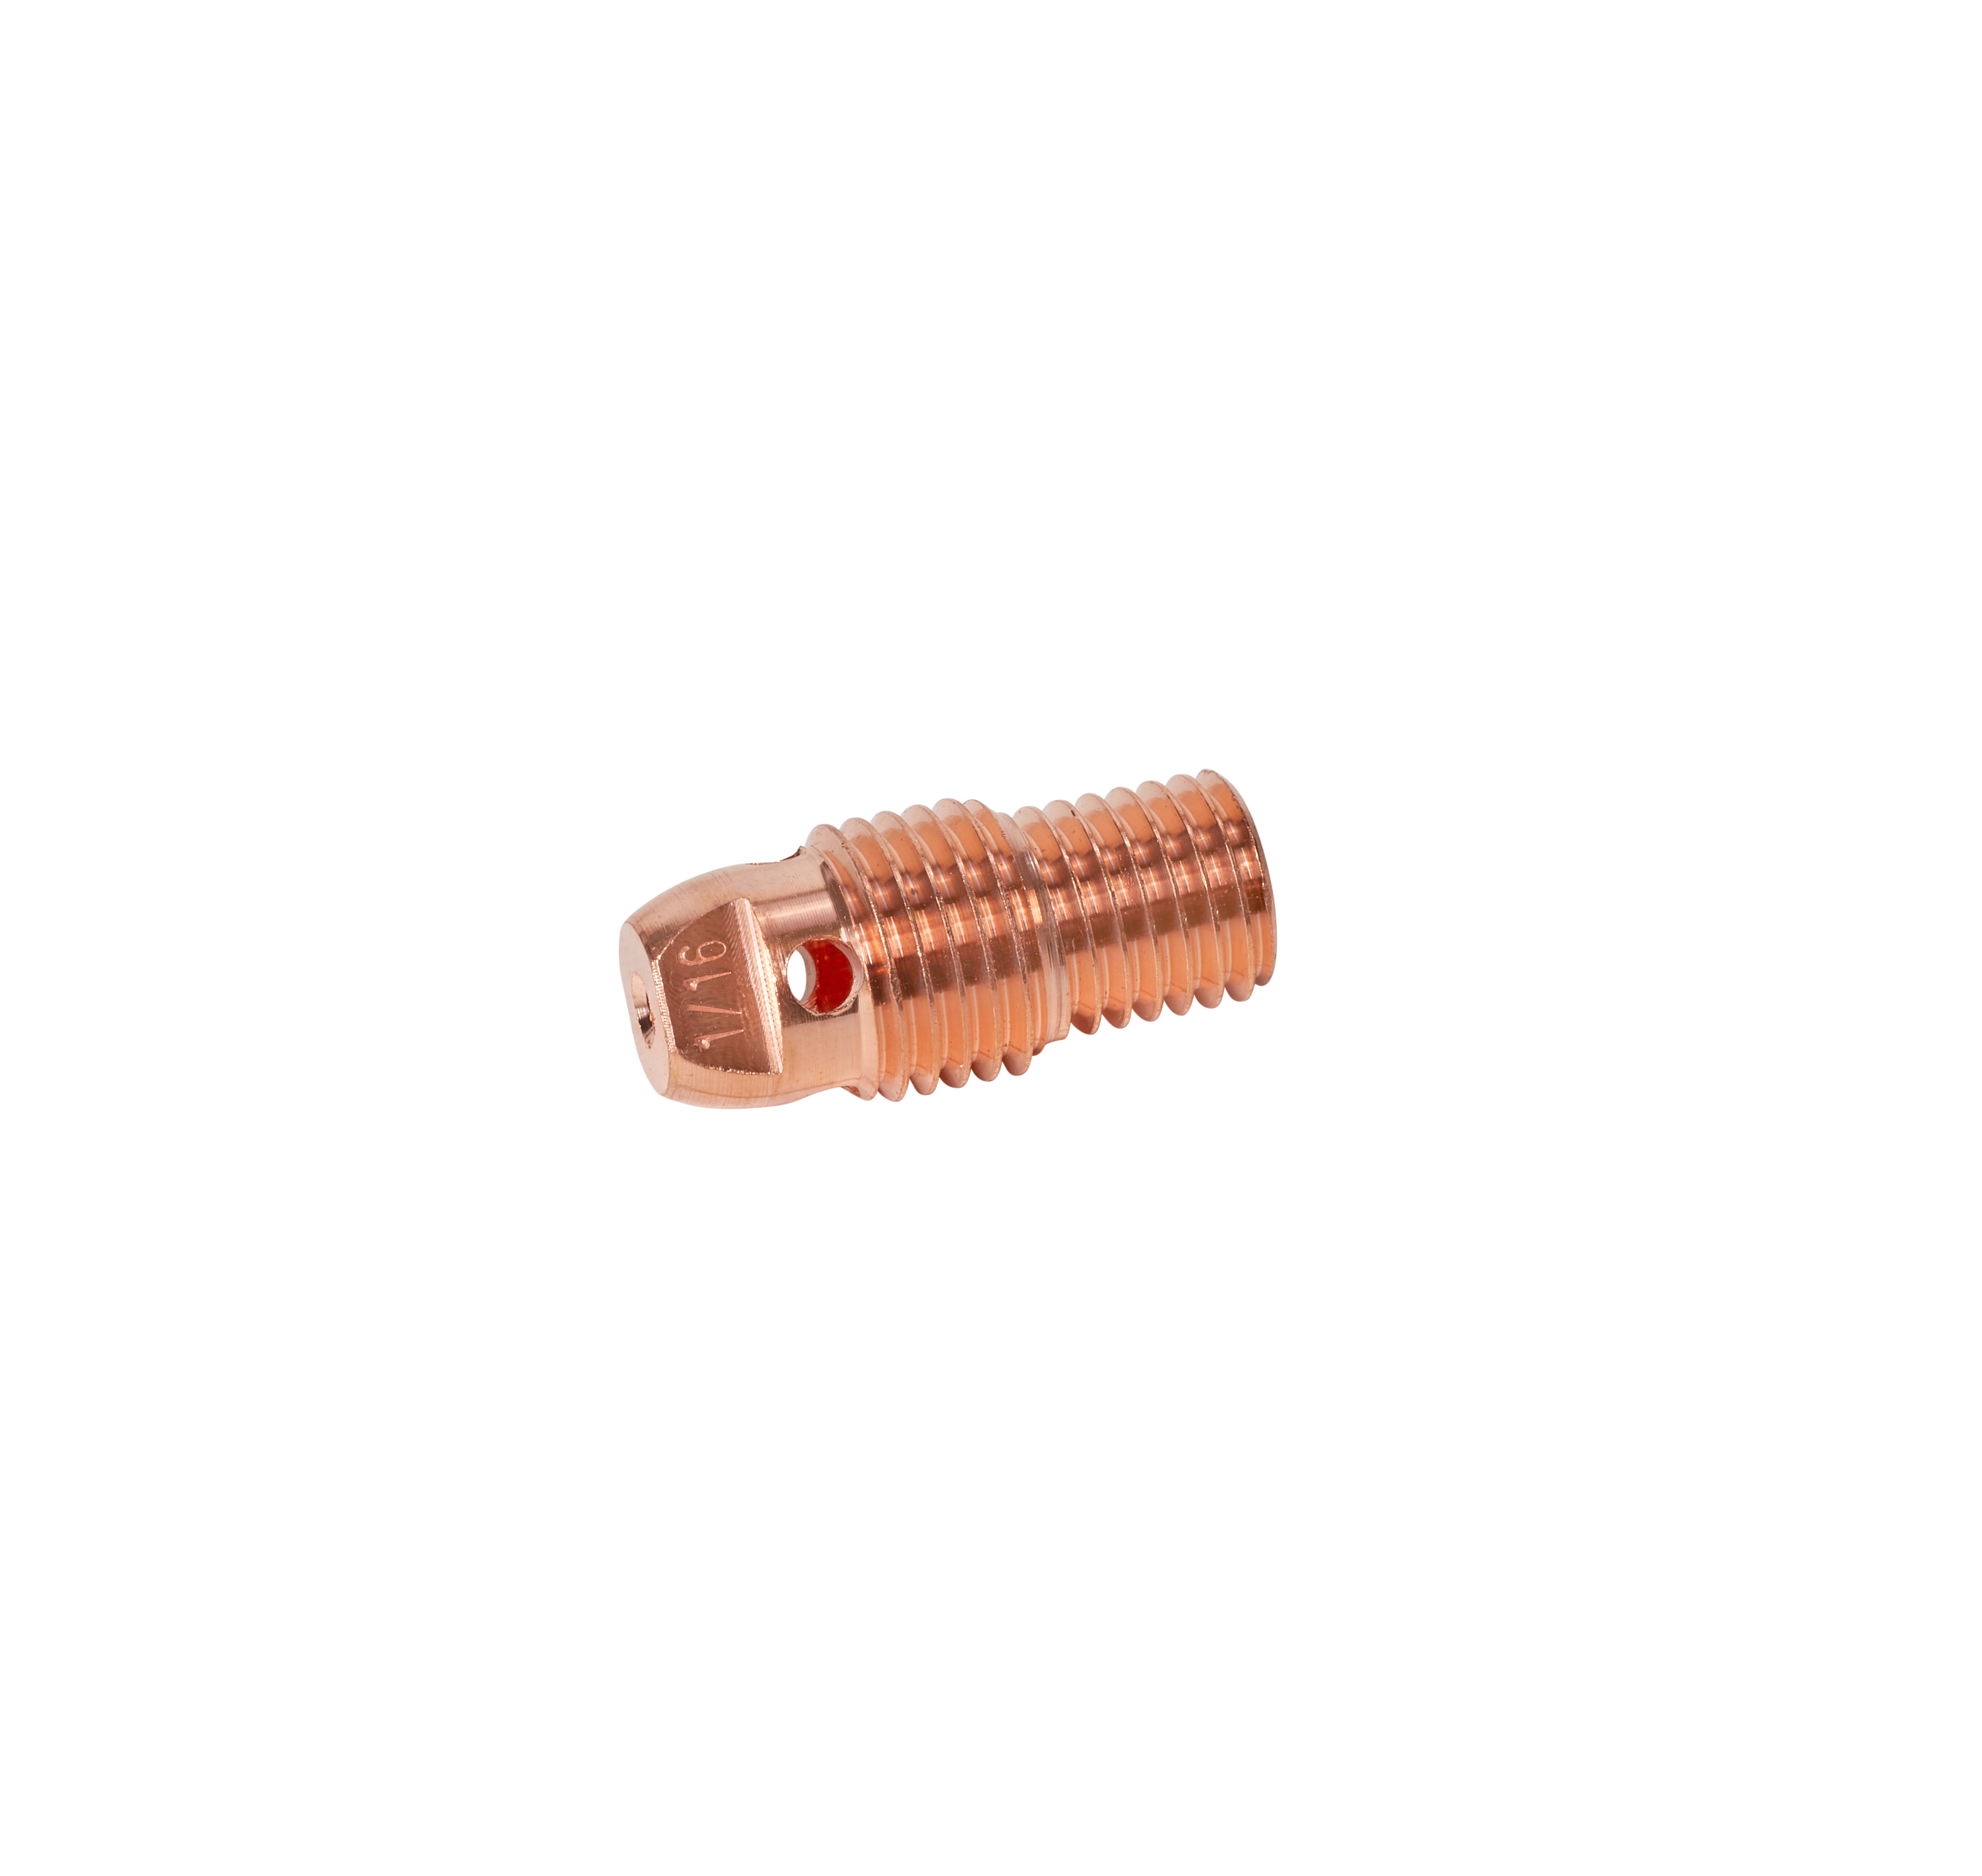 Weldmark by CK Worldwide 13N27 Copper Collet Body 1/16 (0.0625) Max Electrode Diameter